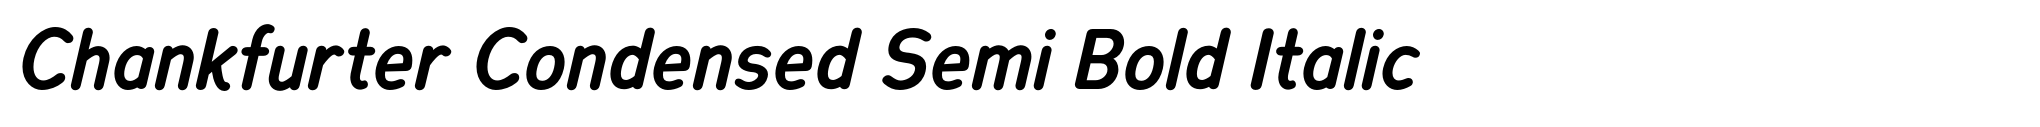 Chankfurter Condensed Semi Bold Italic image